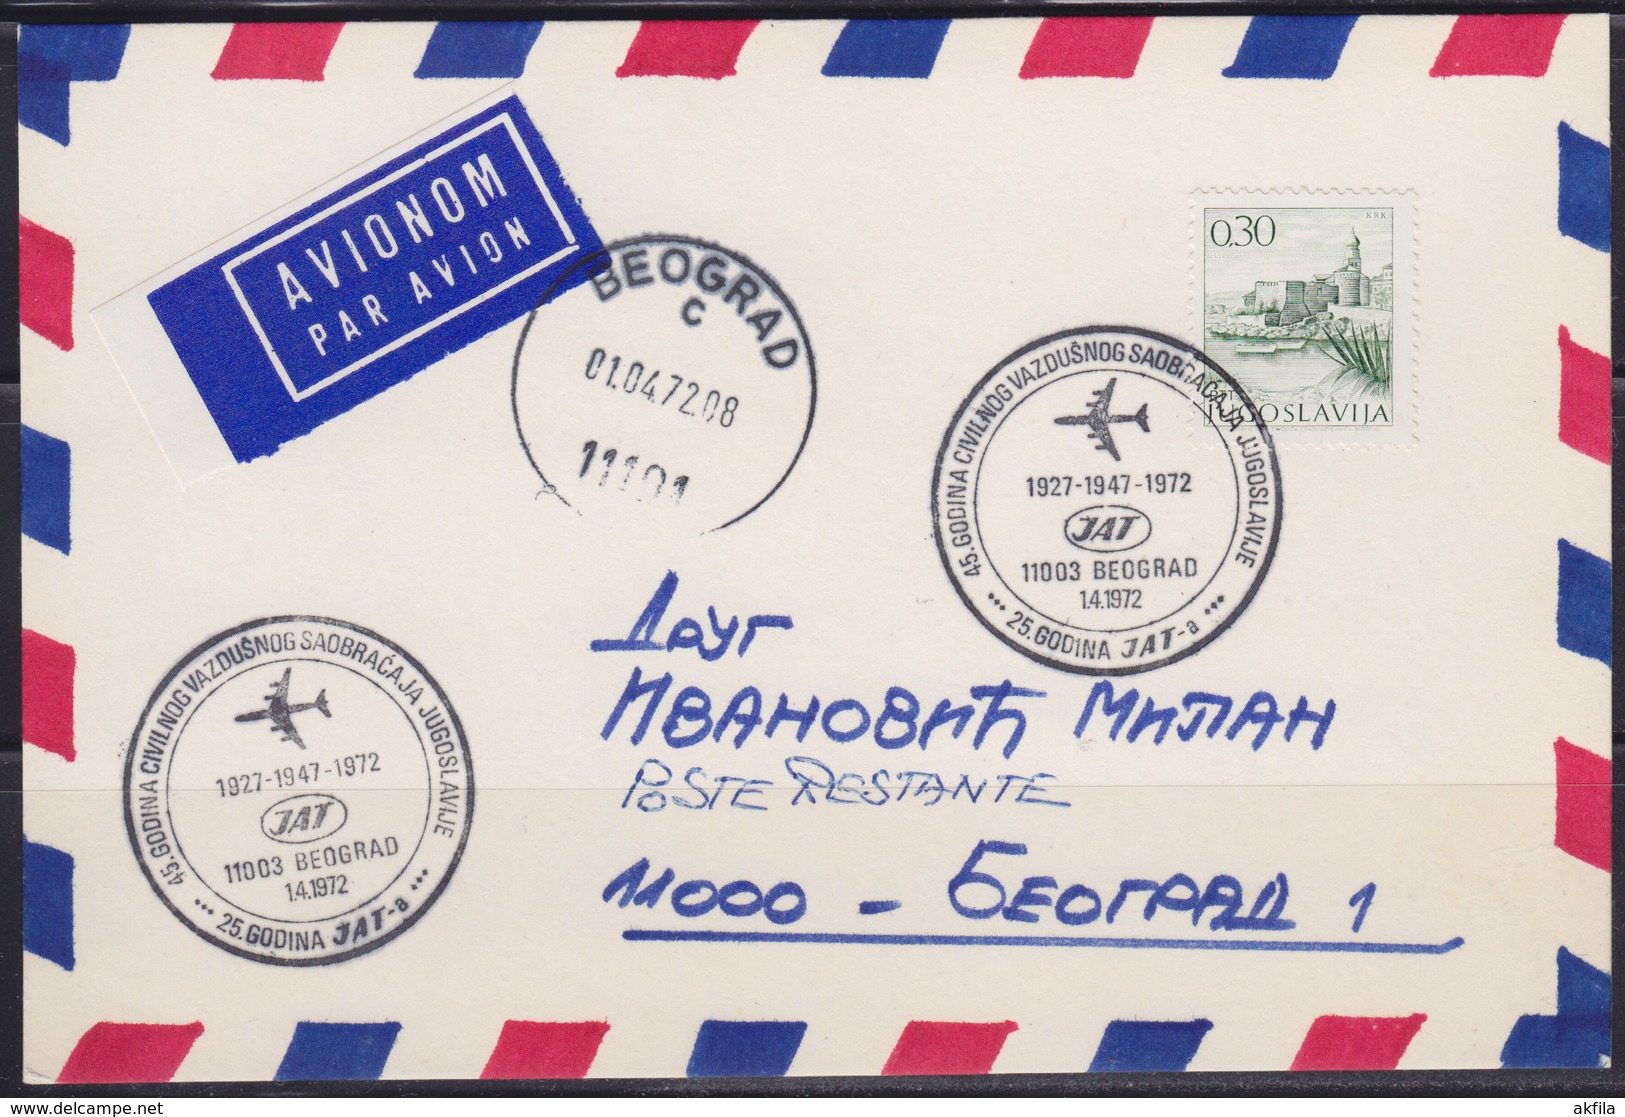 Yugoslavia 1972 Yugoslav Airlines (JAT) - 25th Anniversary, Official Bigger Postmark, Airmail Card - Luftpost